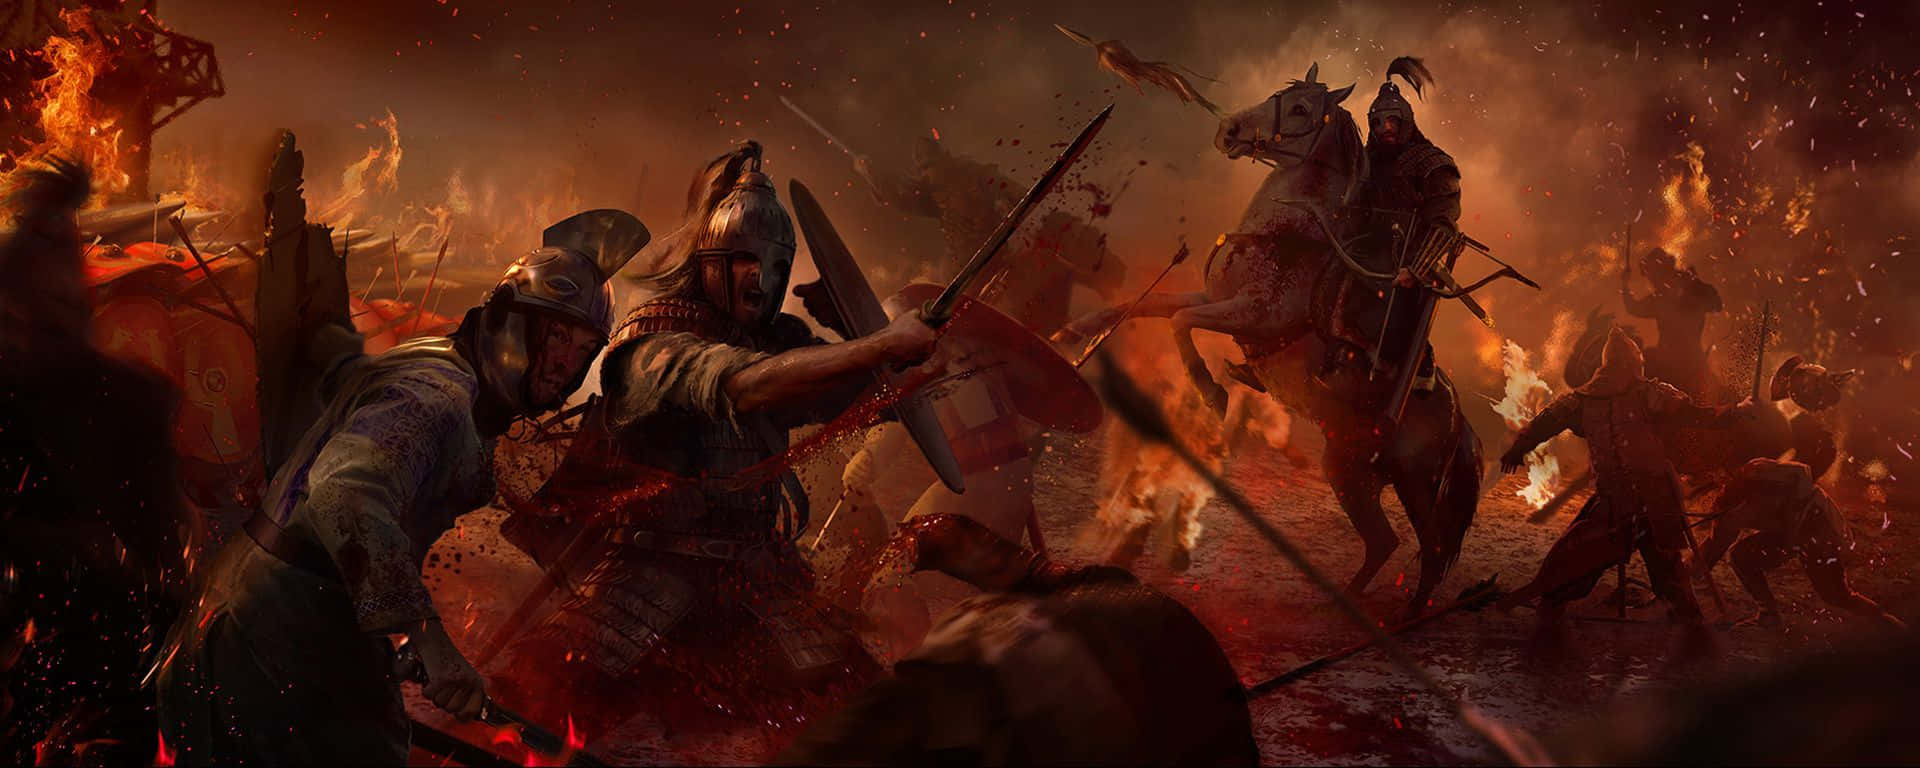 Enter a World of Total War in Attila Wallpaper